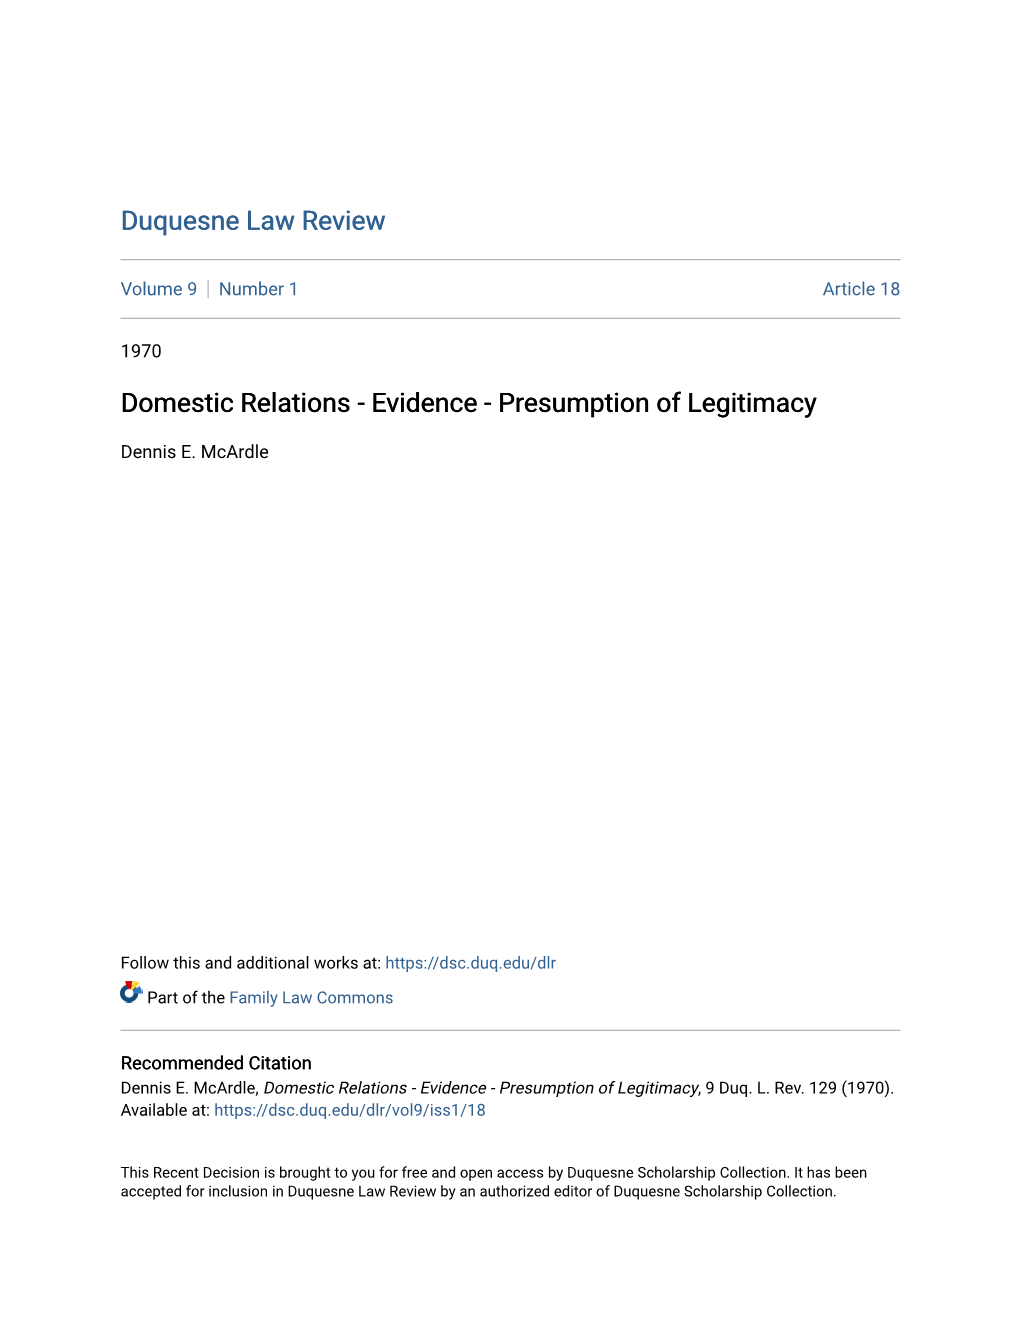 Domestic Relations - Evidence - Presumption of Legitimacy